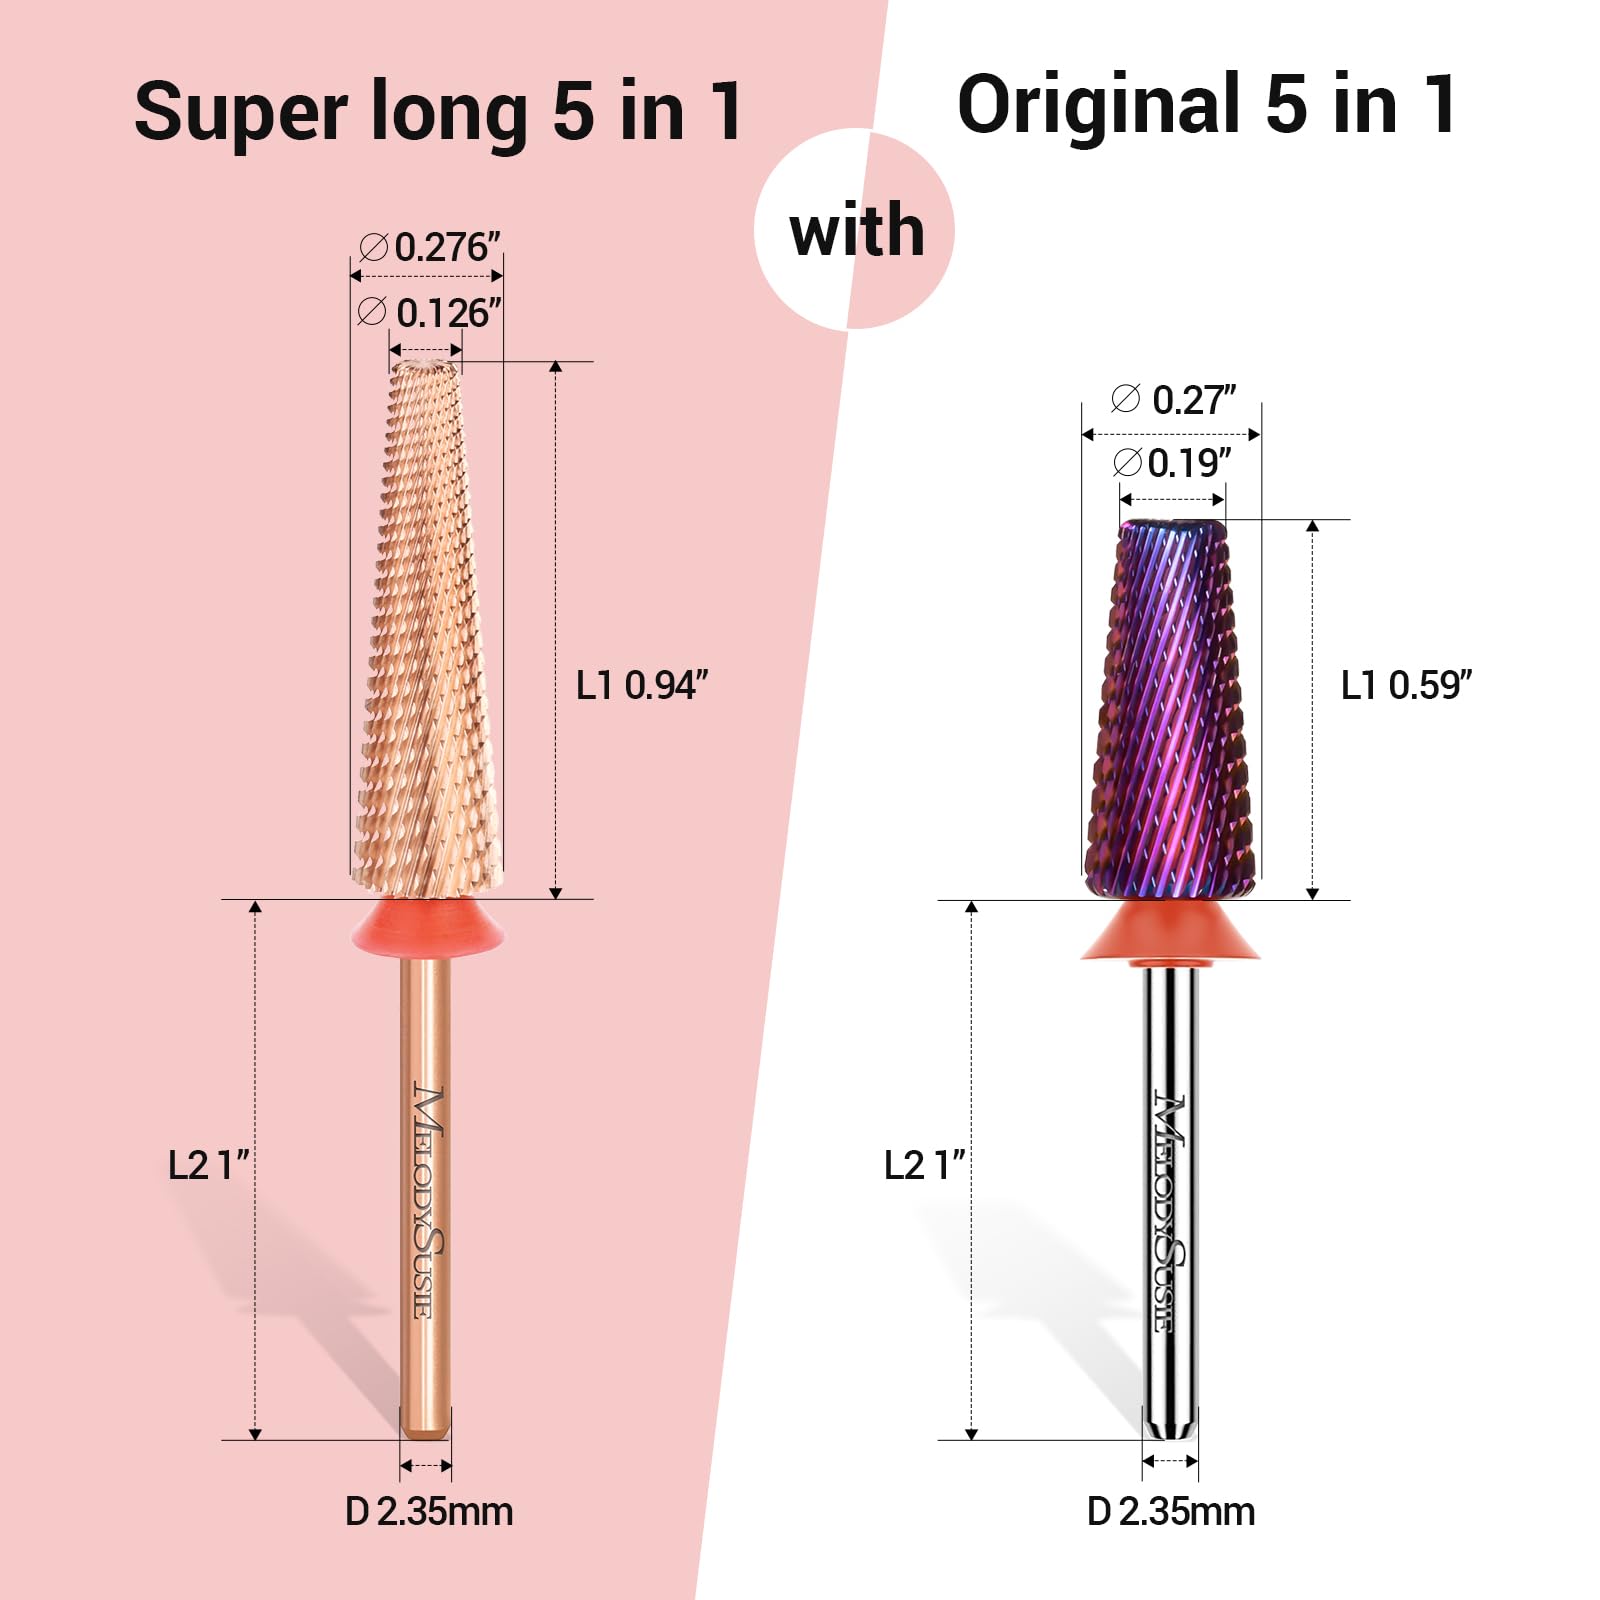 Super Long 5 in 1 Tungsten Carbide Nail Drill Bit (Rose-Gold)